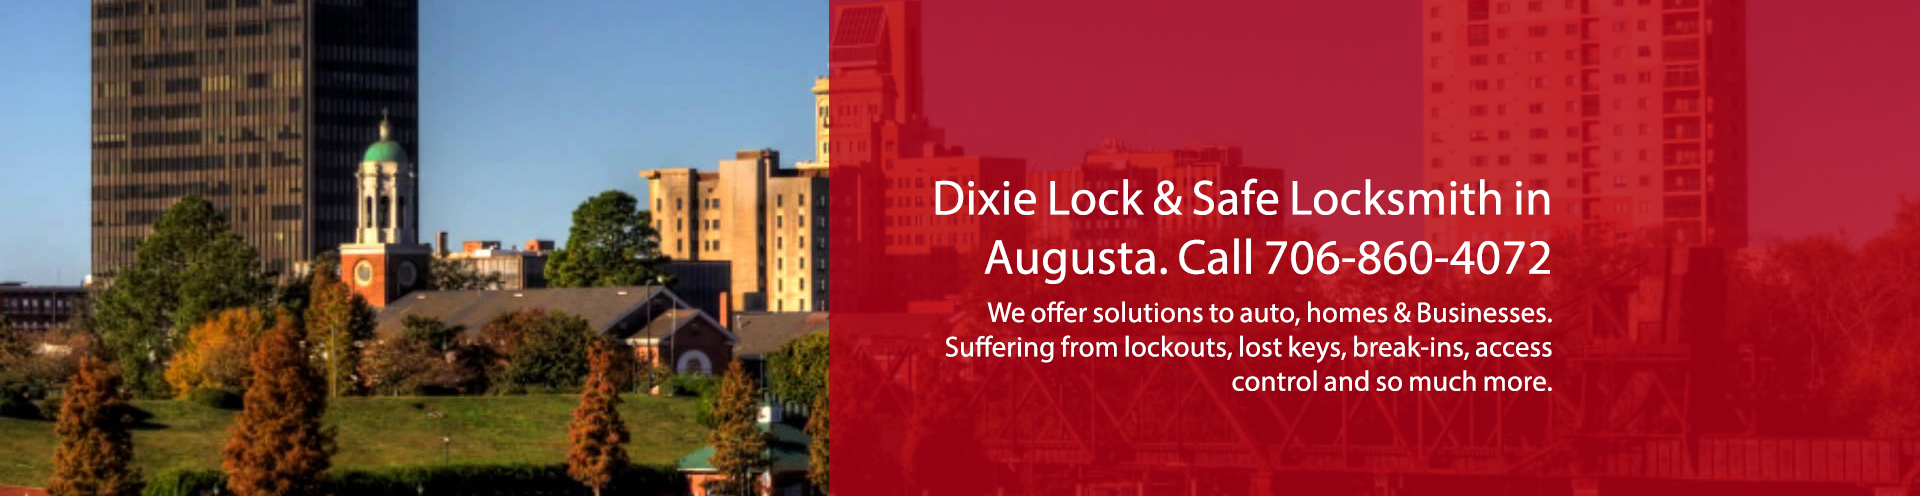 Auto Locksmith Dixie Lock & Safe